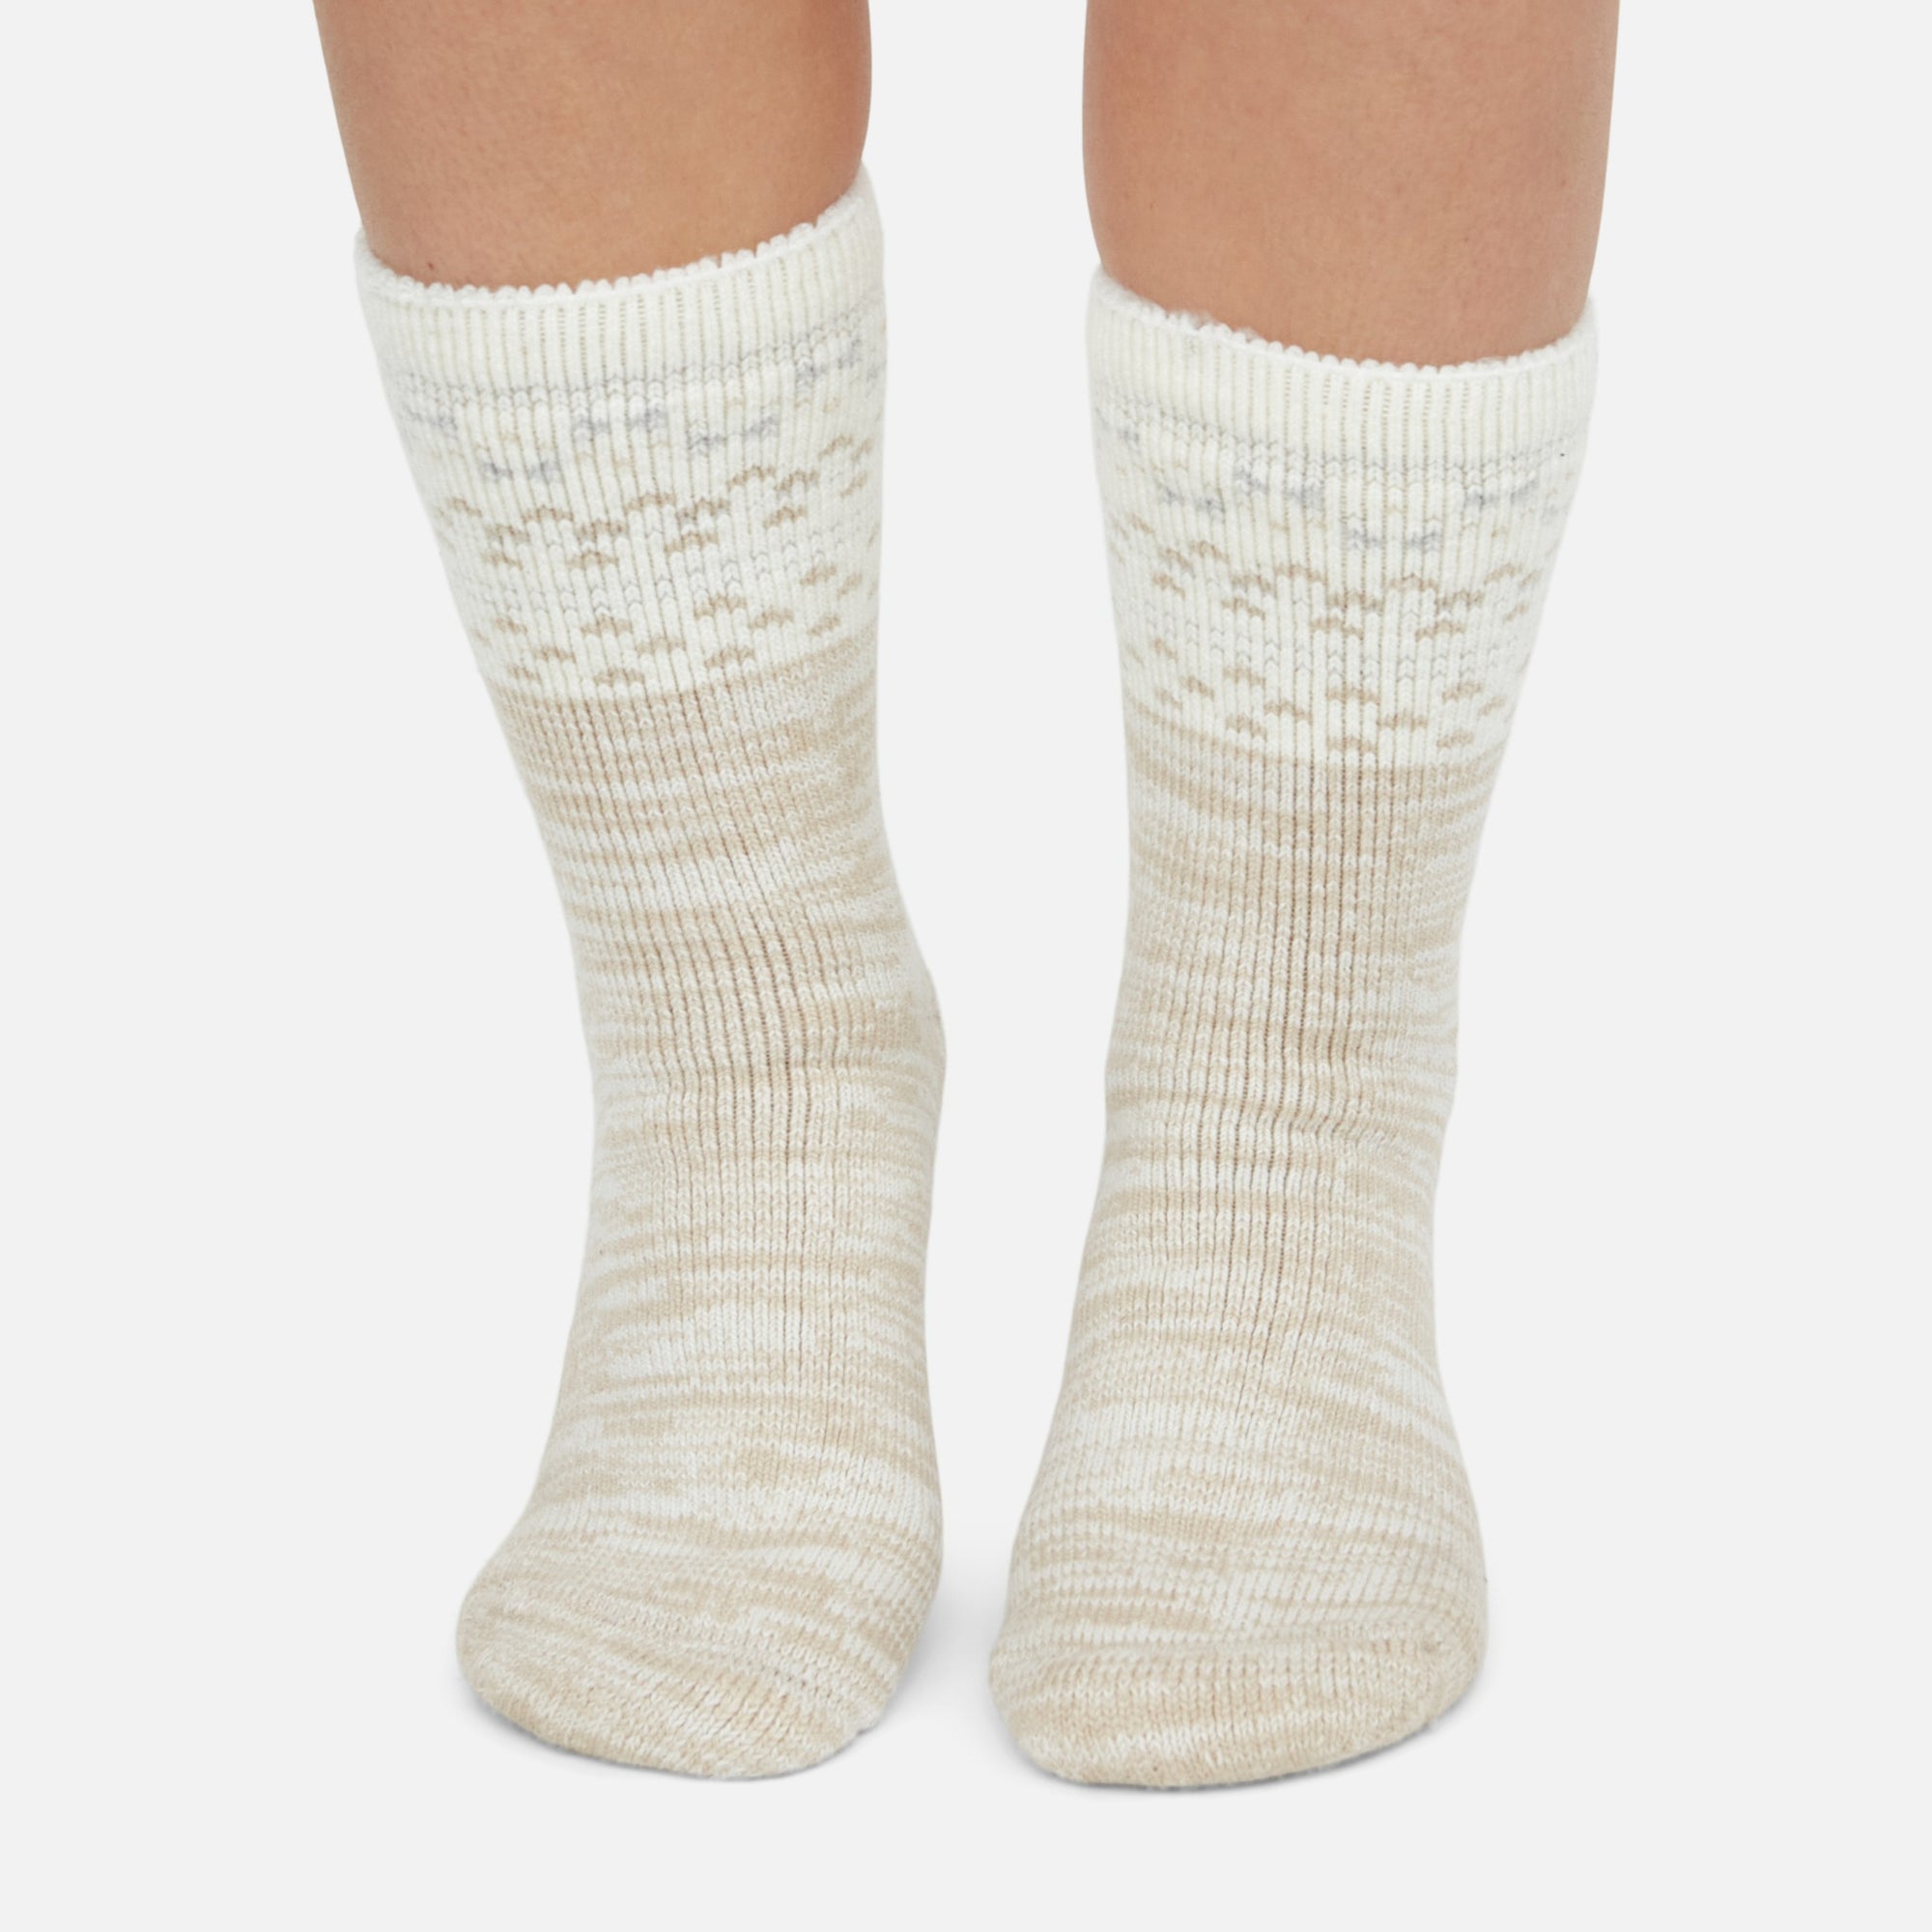 Beige slipper socks with norwegian pattern